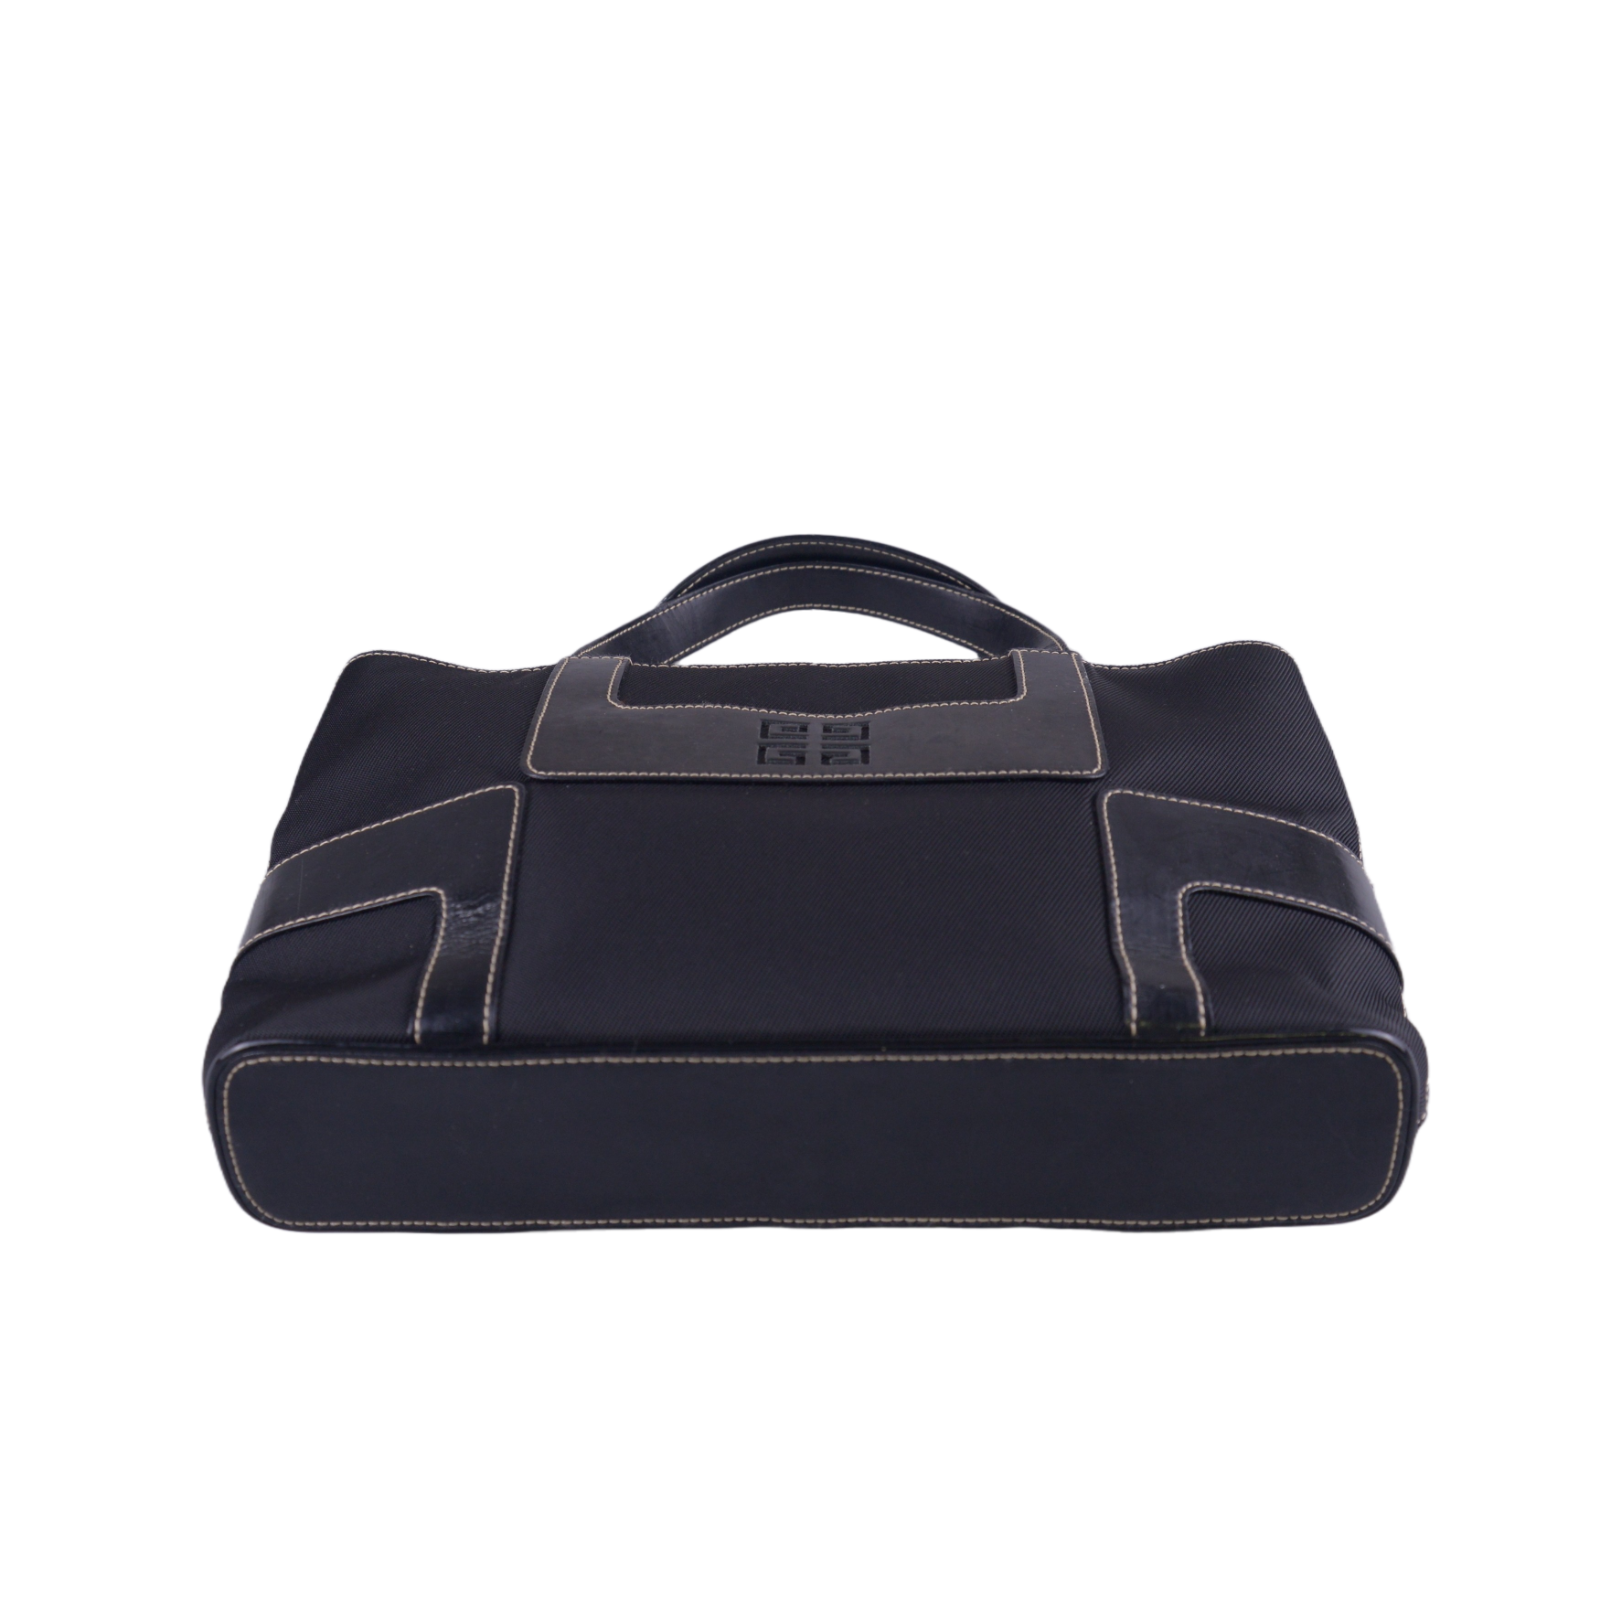 Givenchy Handbag Leather x Canvas Bag Black